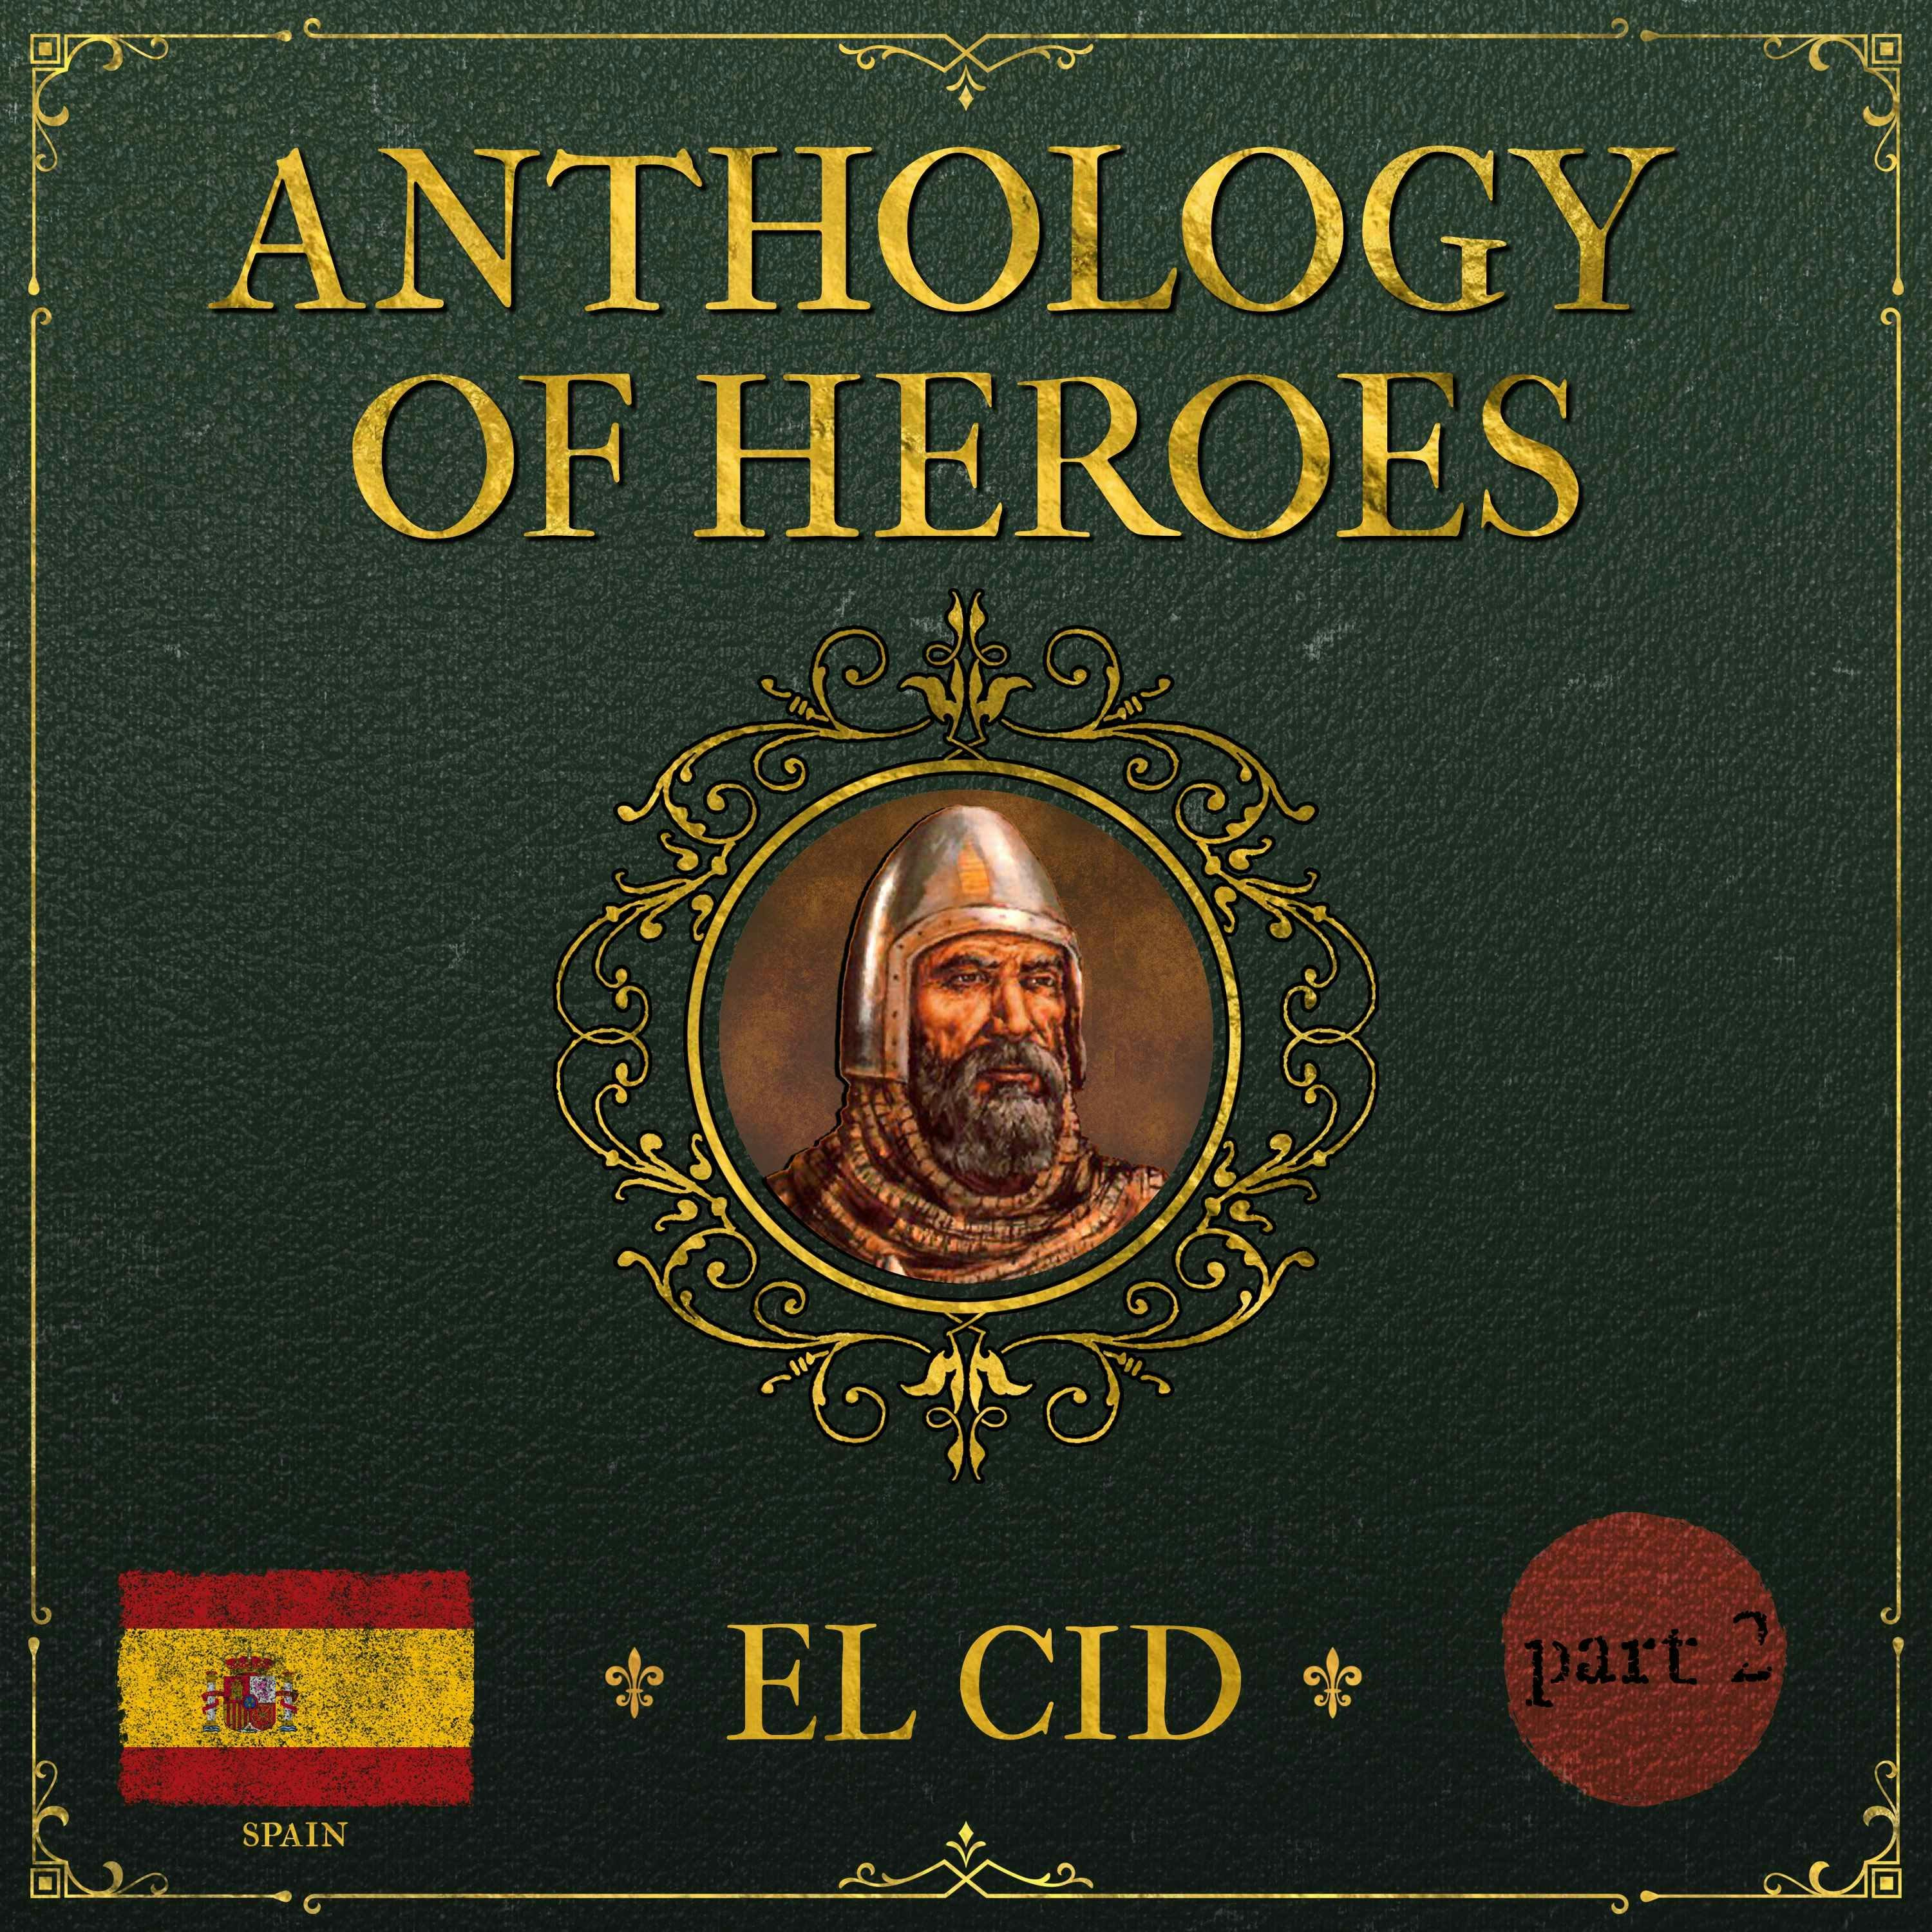 El Cid: The Man Behind the Legend | Part 2